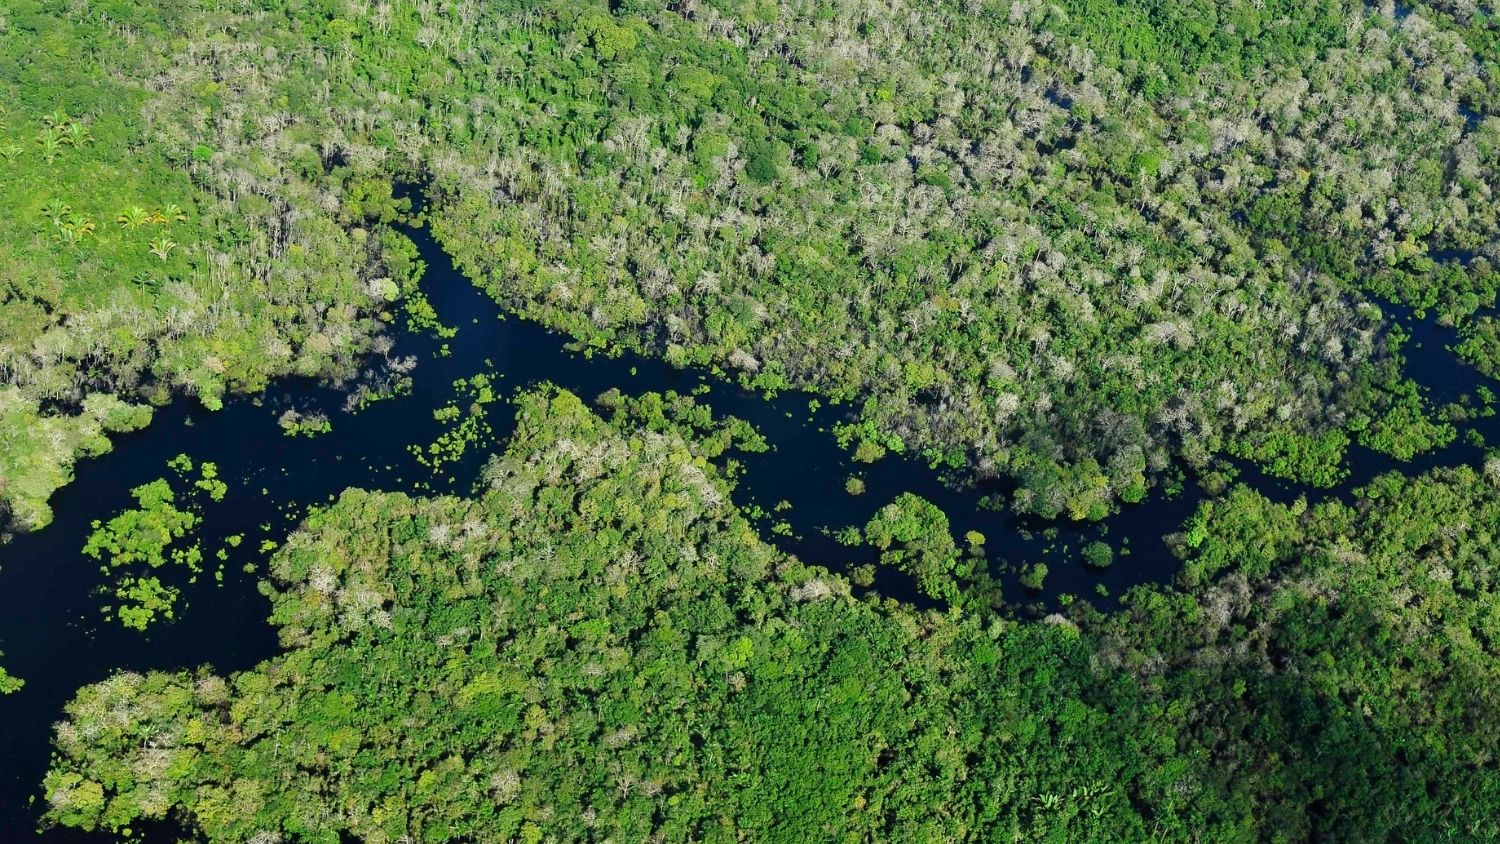 Amazon rainforest aerial view.